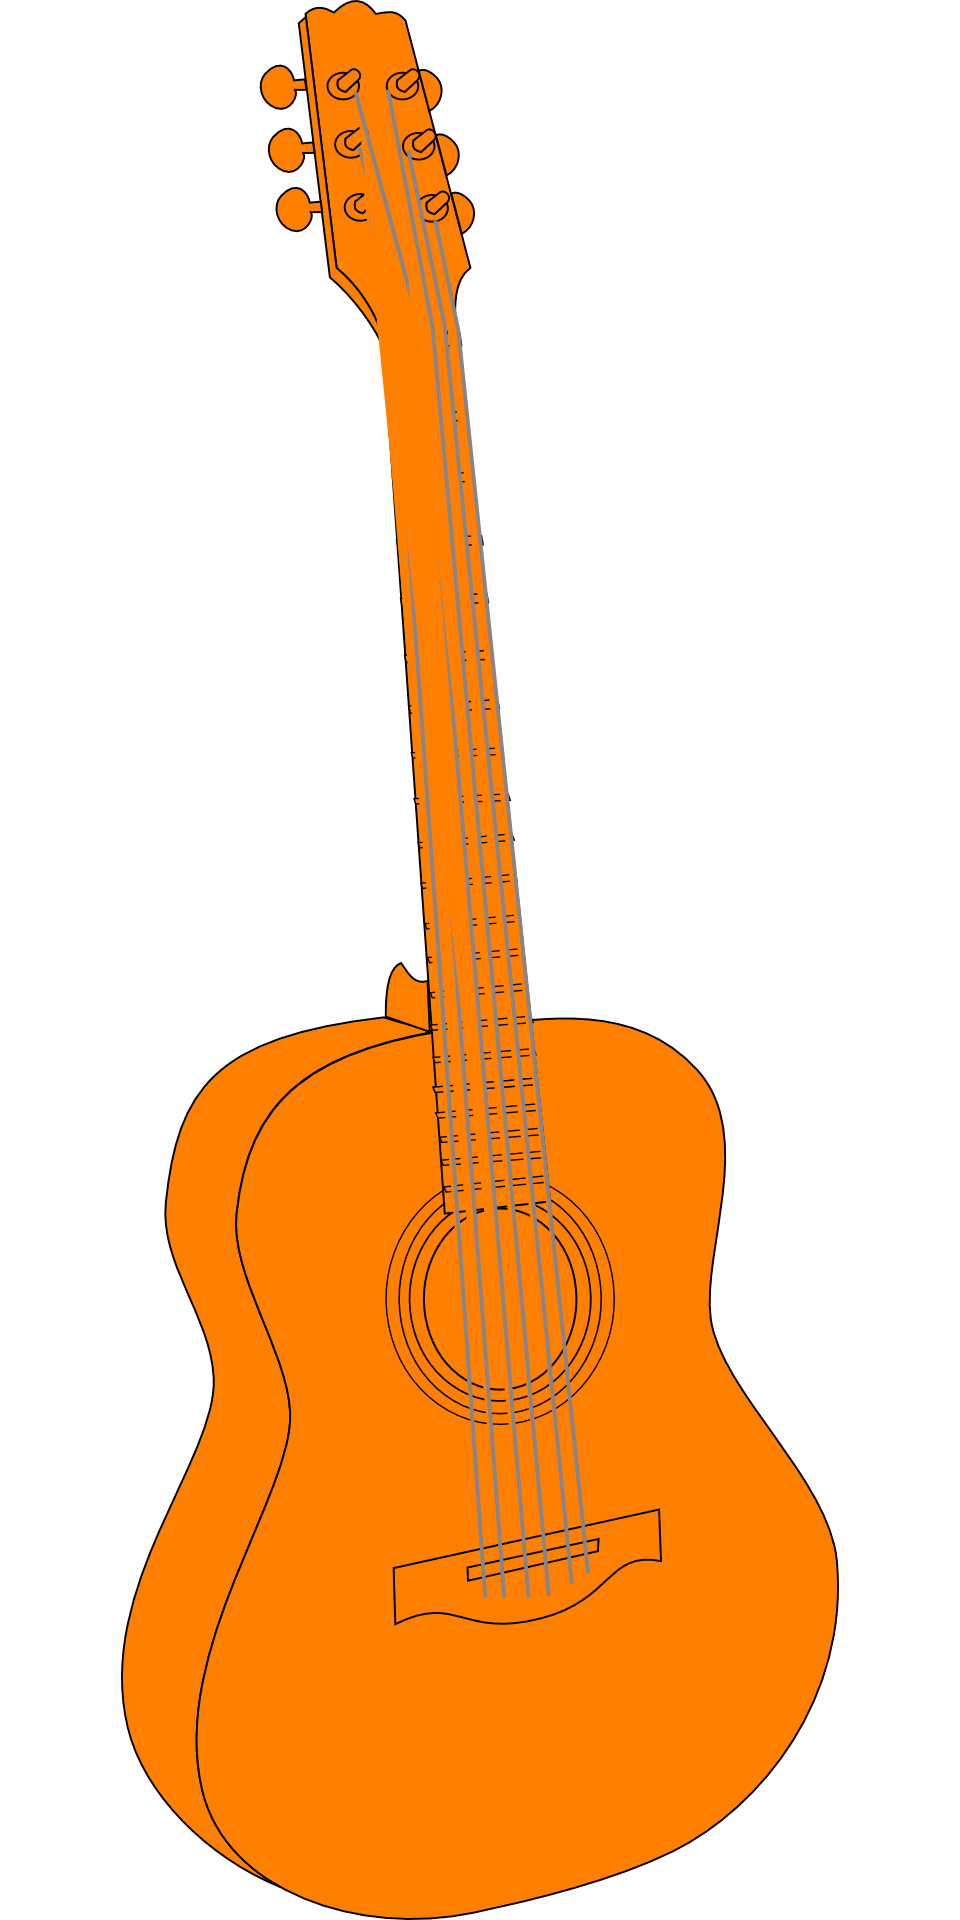 guitar clipart orange guitar